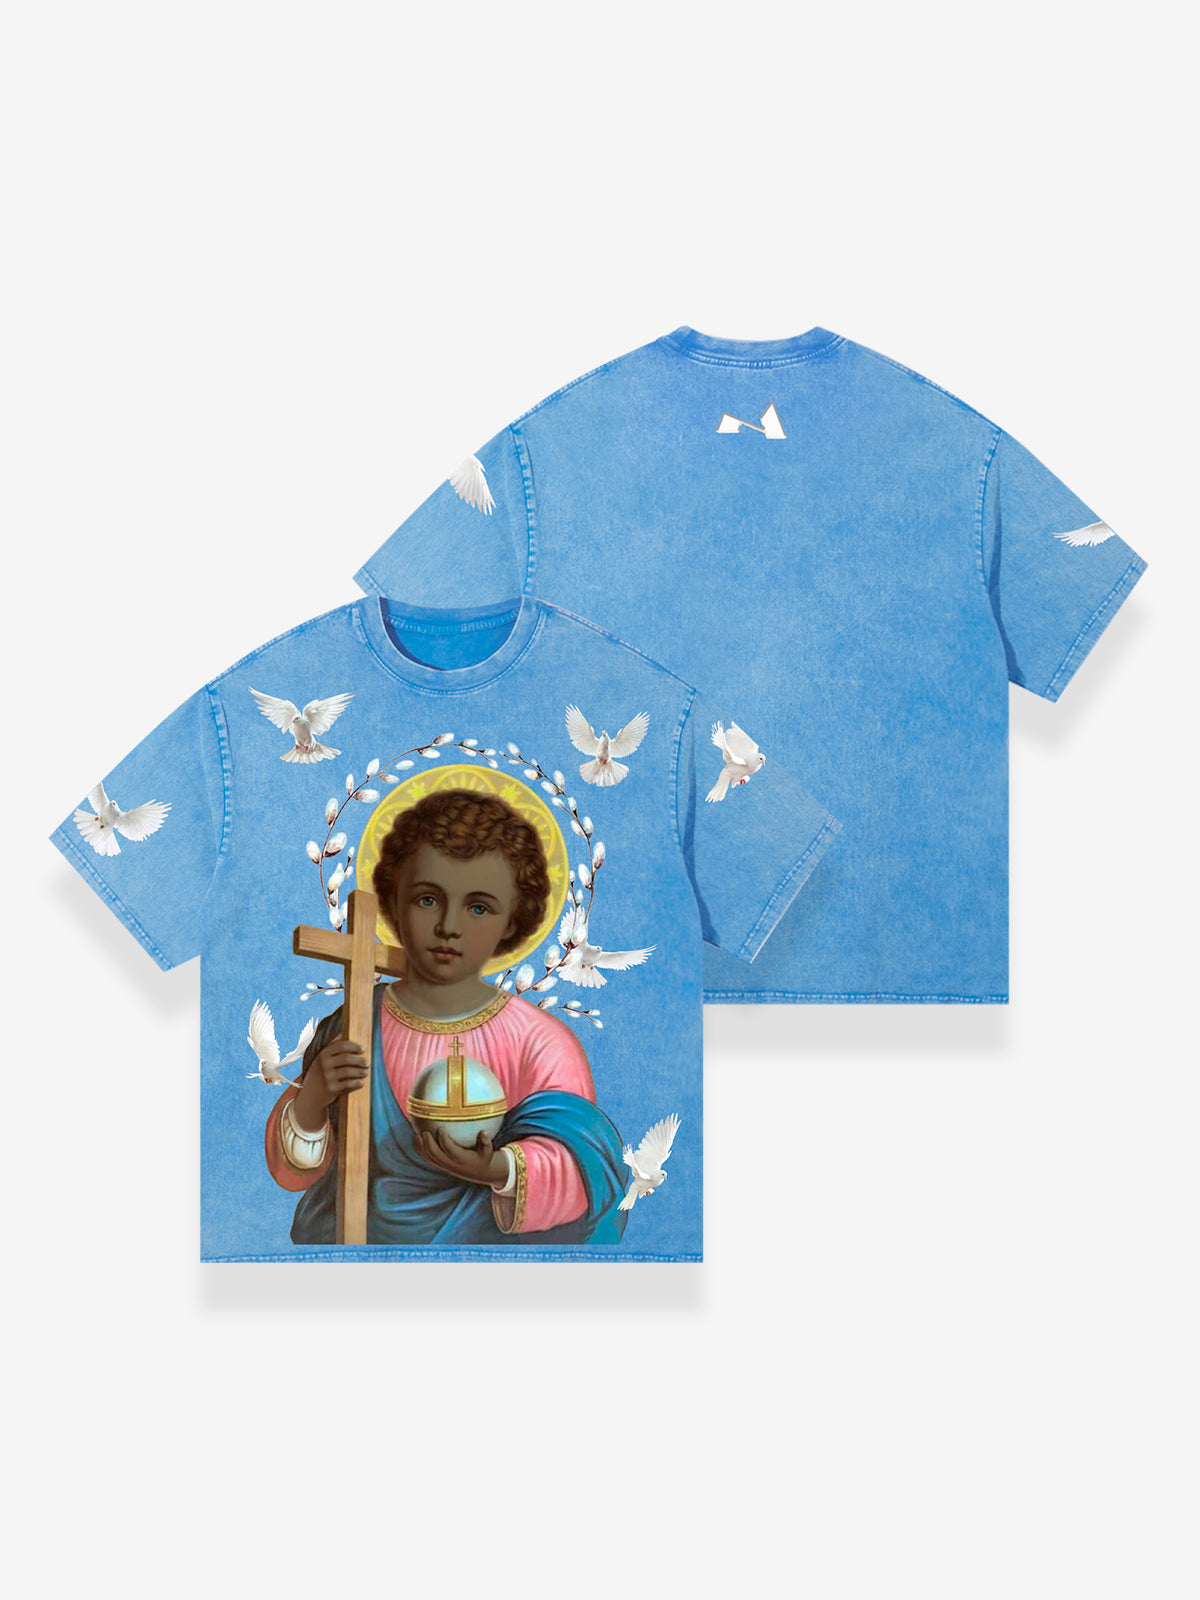 OBSTACLES & DANGERS© Black Holy Child Jesus sky blue T-shirt